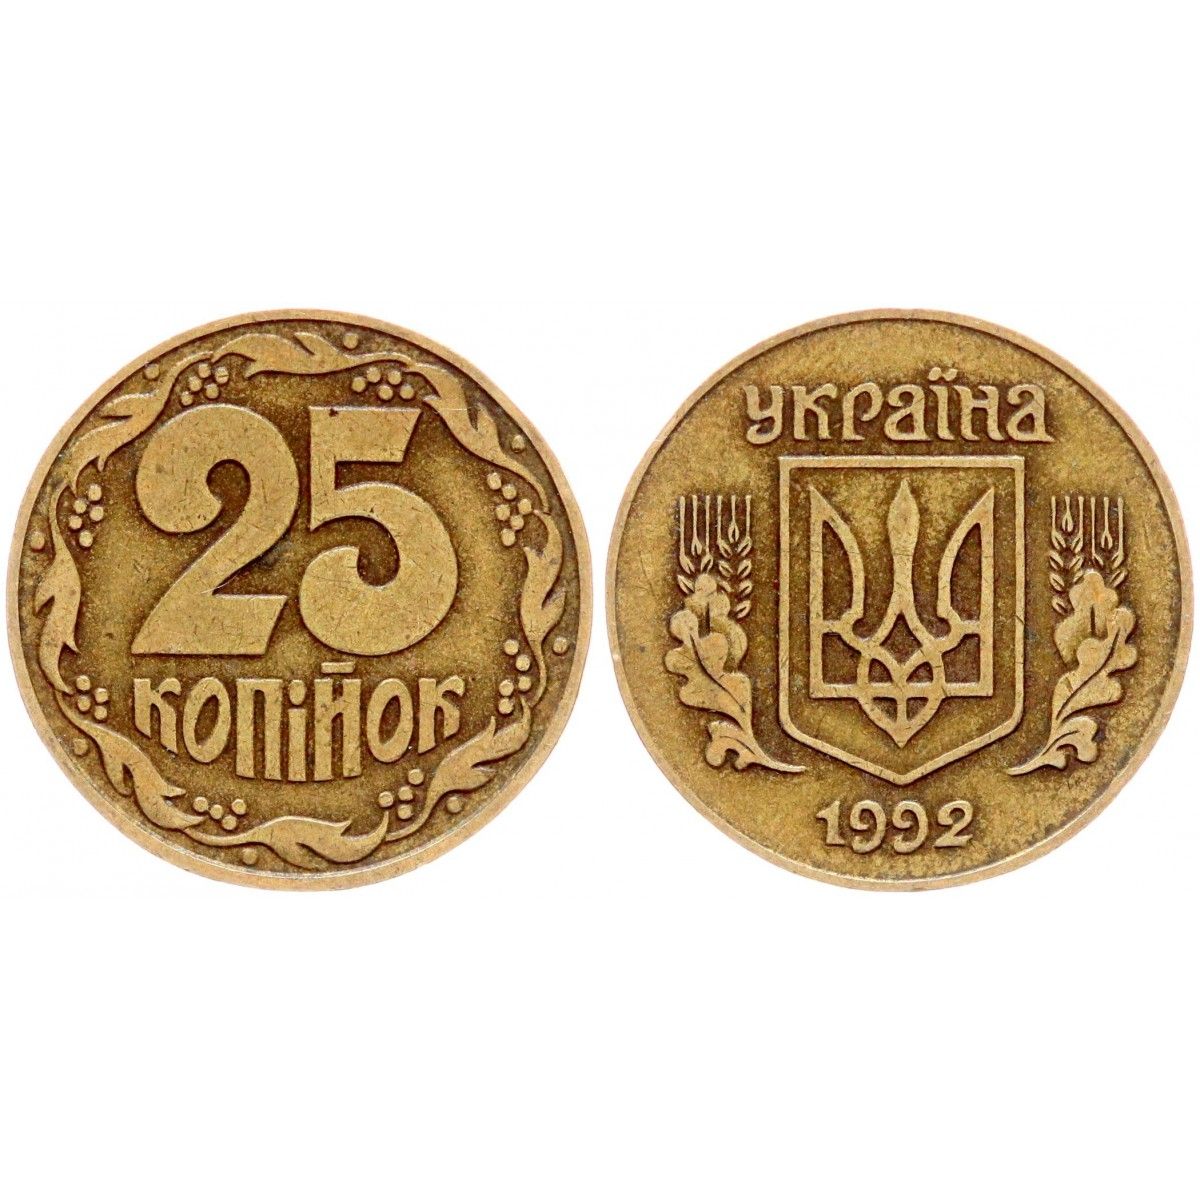 5 копеек 1992 украина. Монета 25 копеек 1992 Украина. Монета 25 копеек 1992 года. Украинская монета 25 копеек. Украинские монеты 25 копеек 1992.